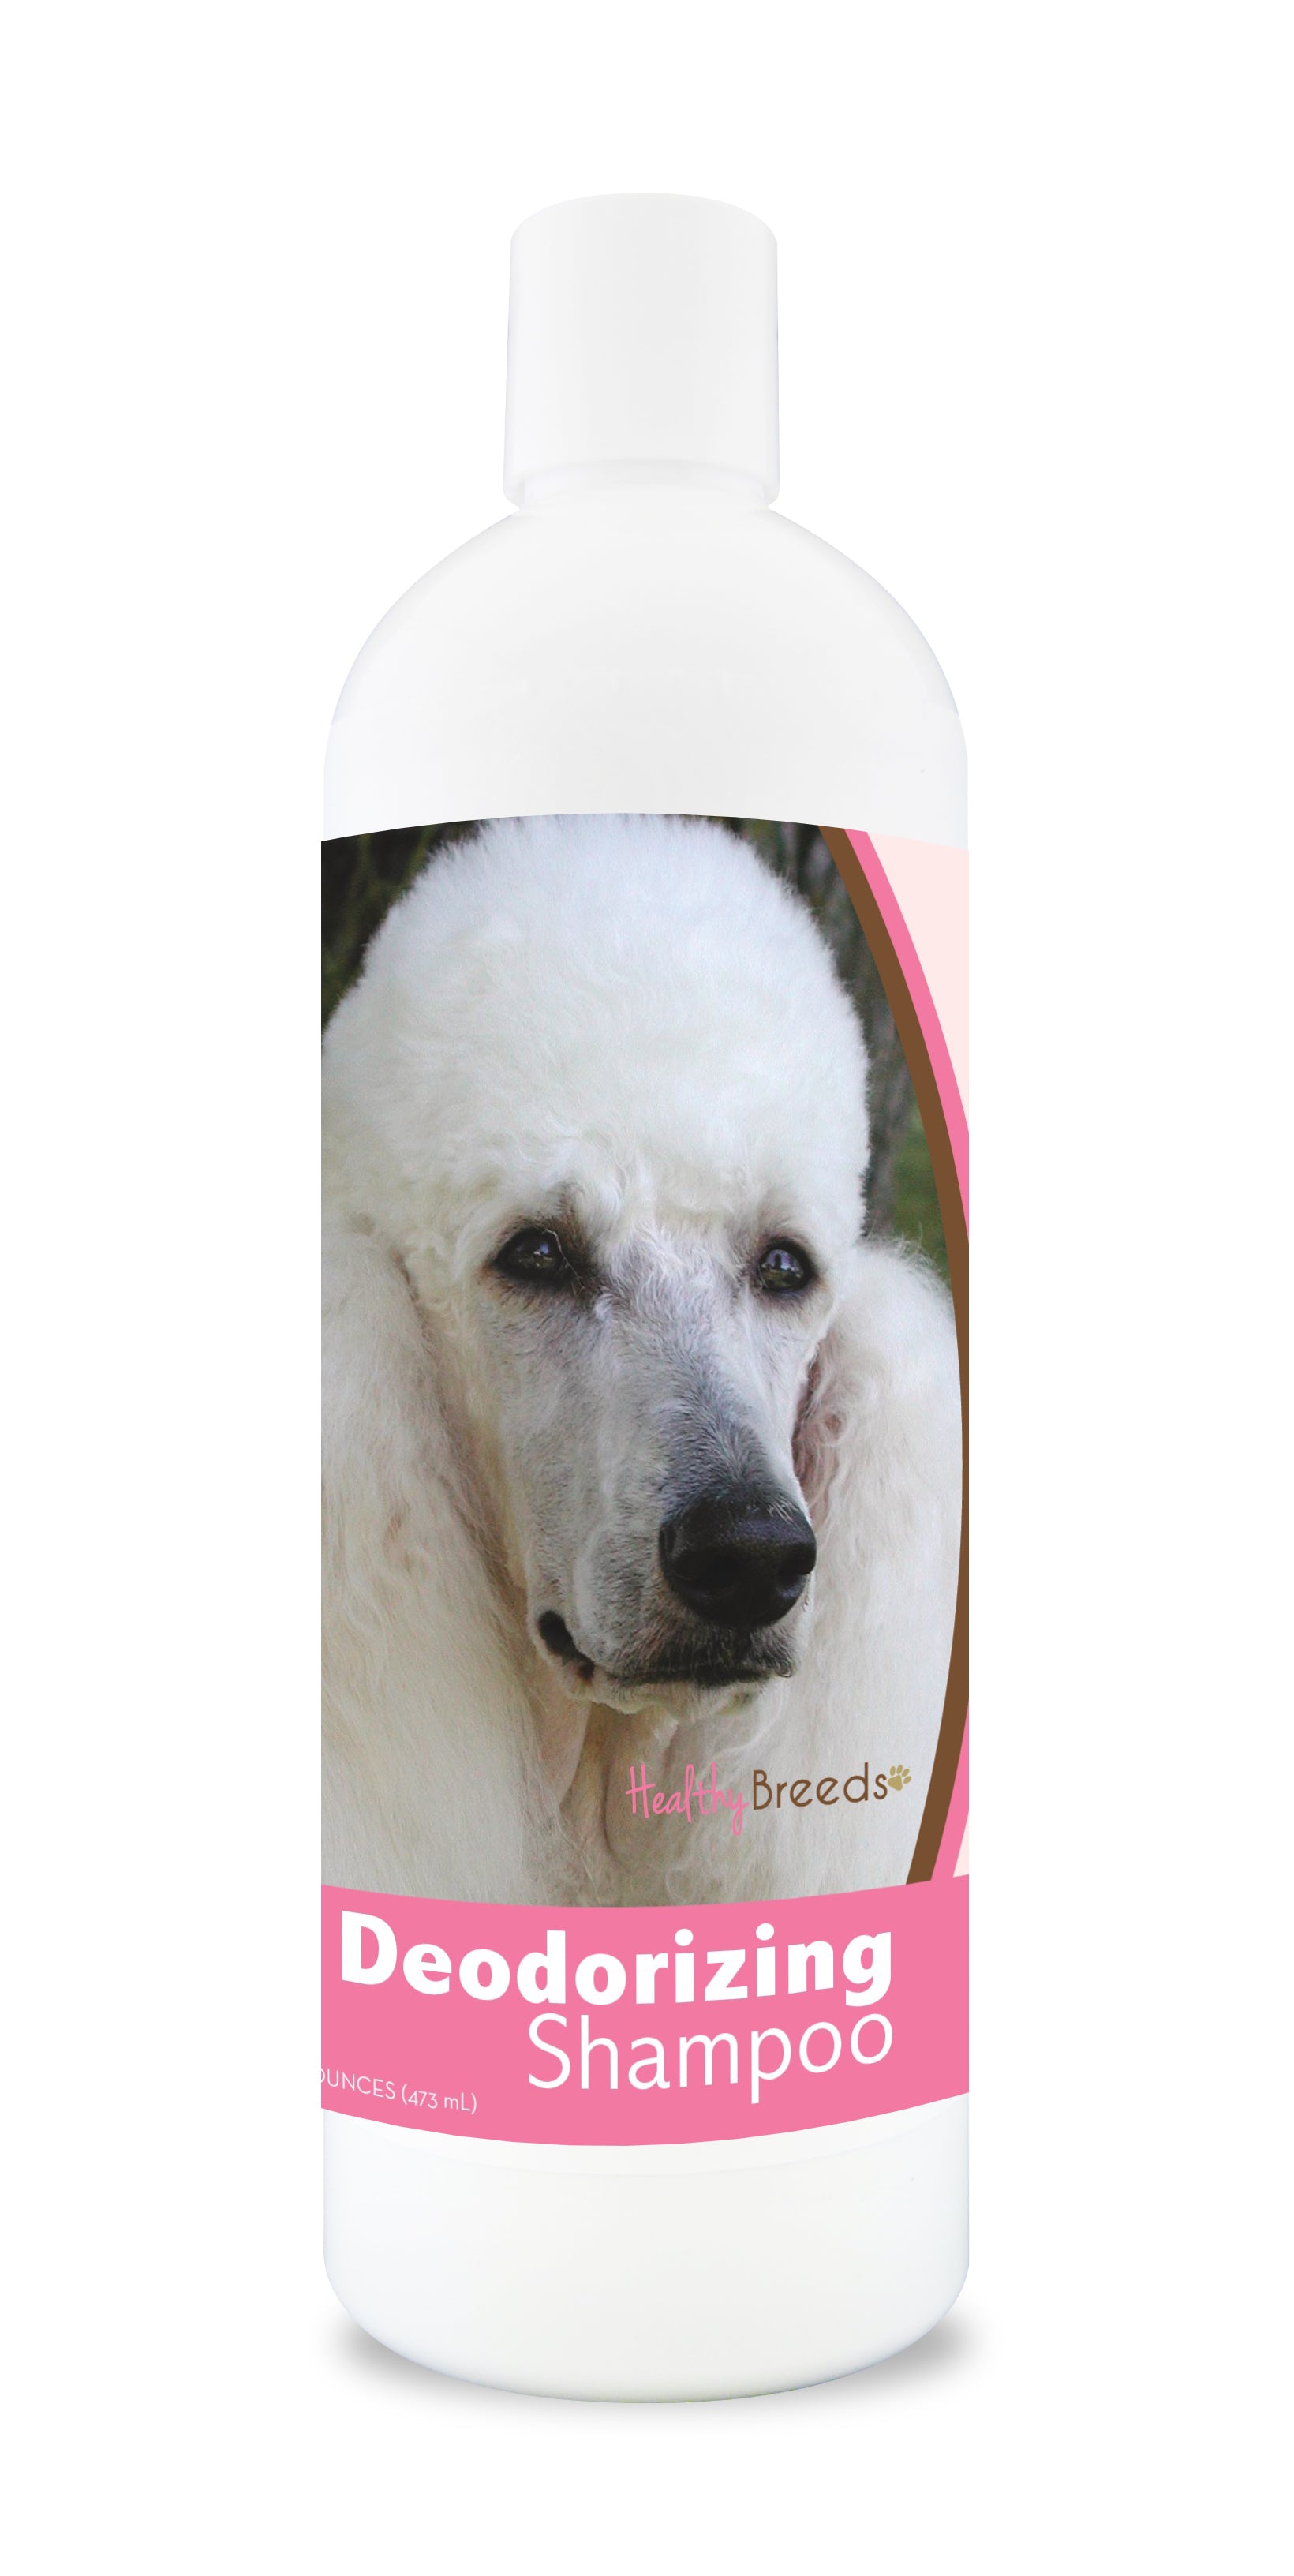 Healthy Breeds Poodle Deodorizing Shampoo 16 oz